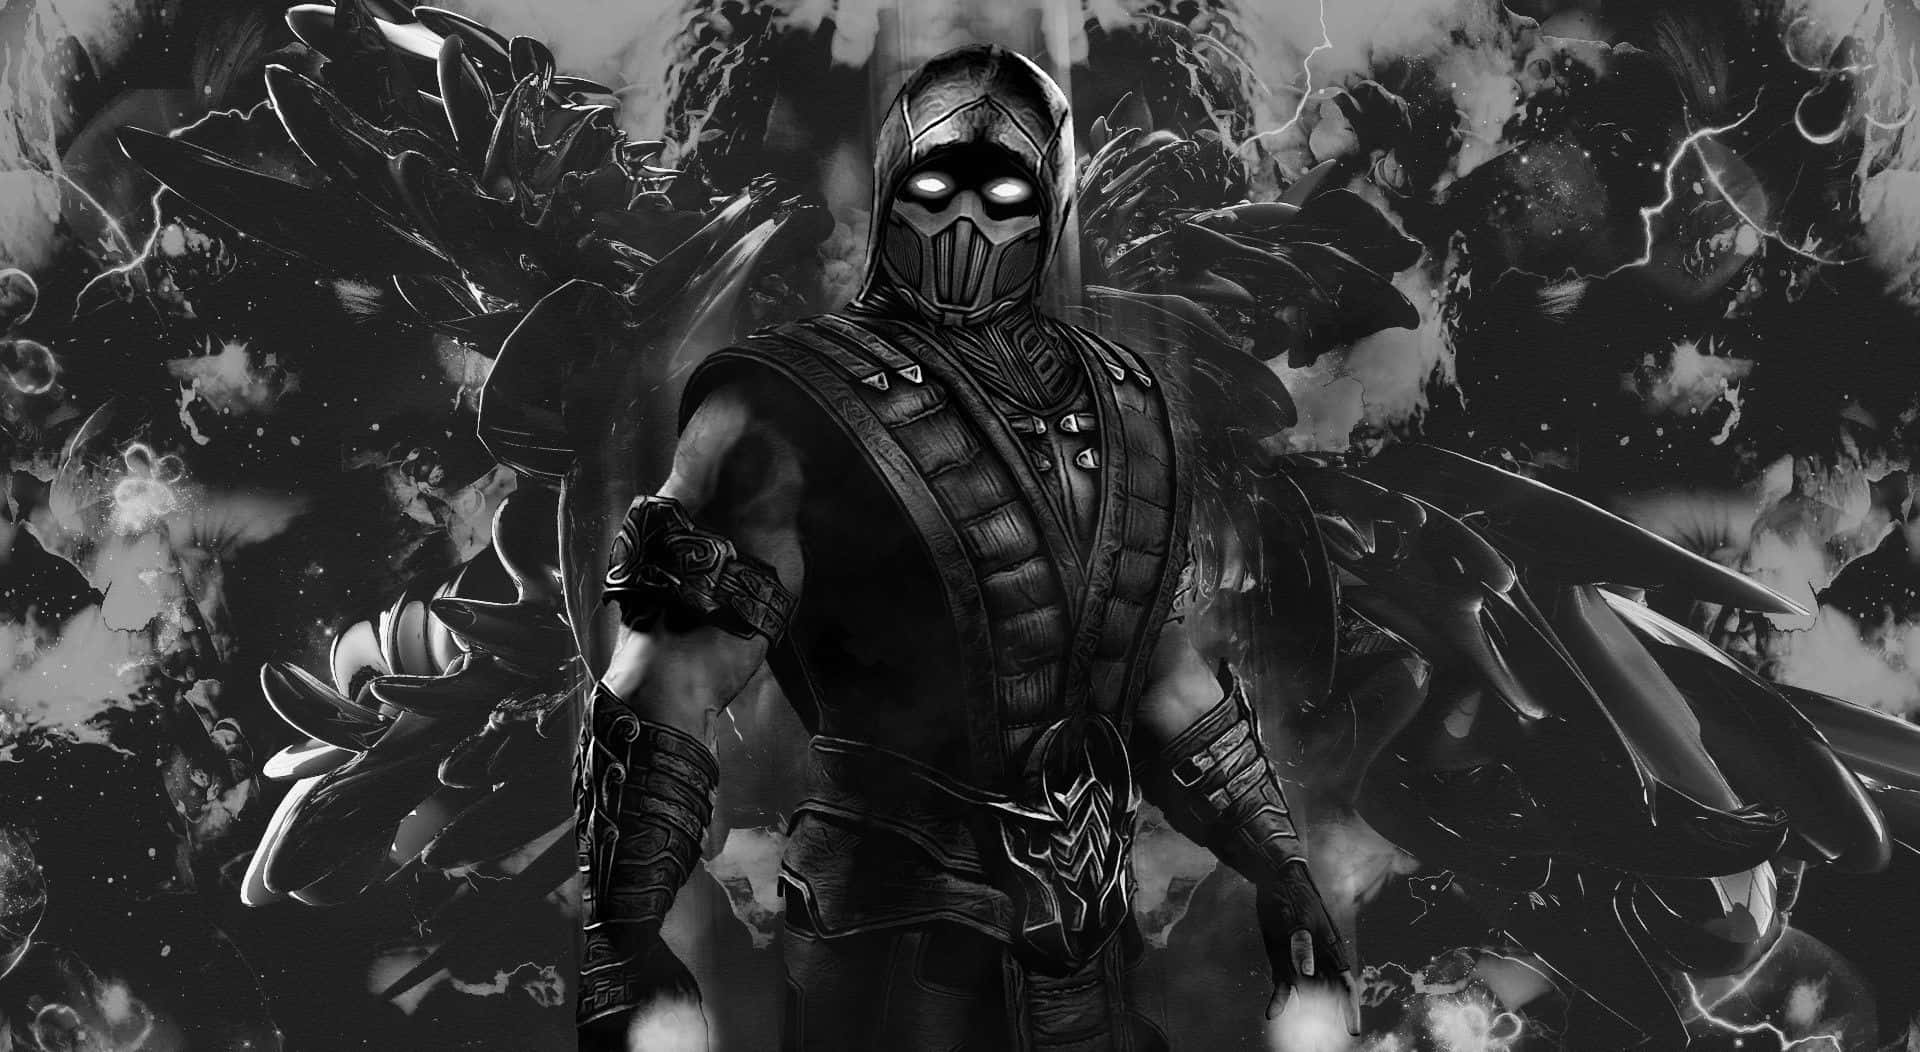 Noob Saibot Unleashes His Dark Power in Mortal Kombat Wallpaper